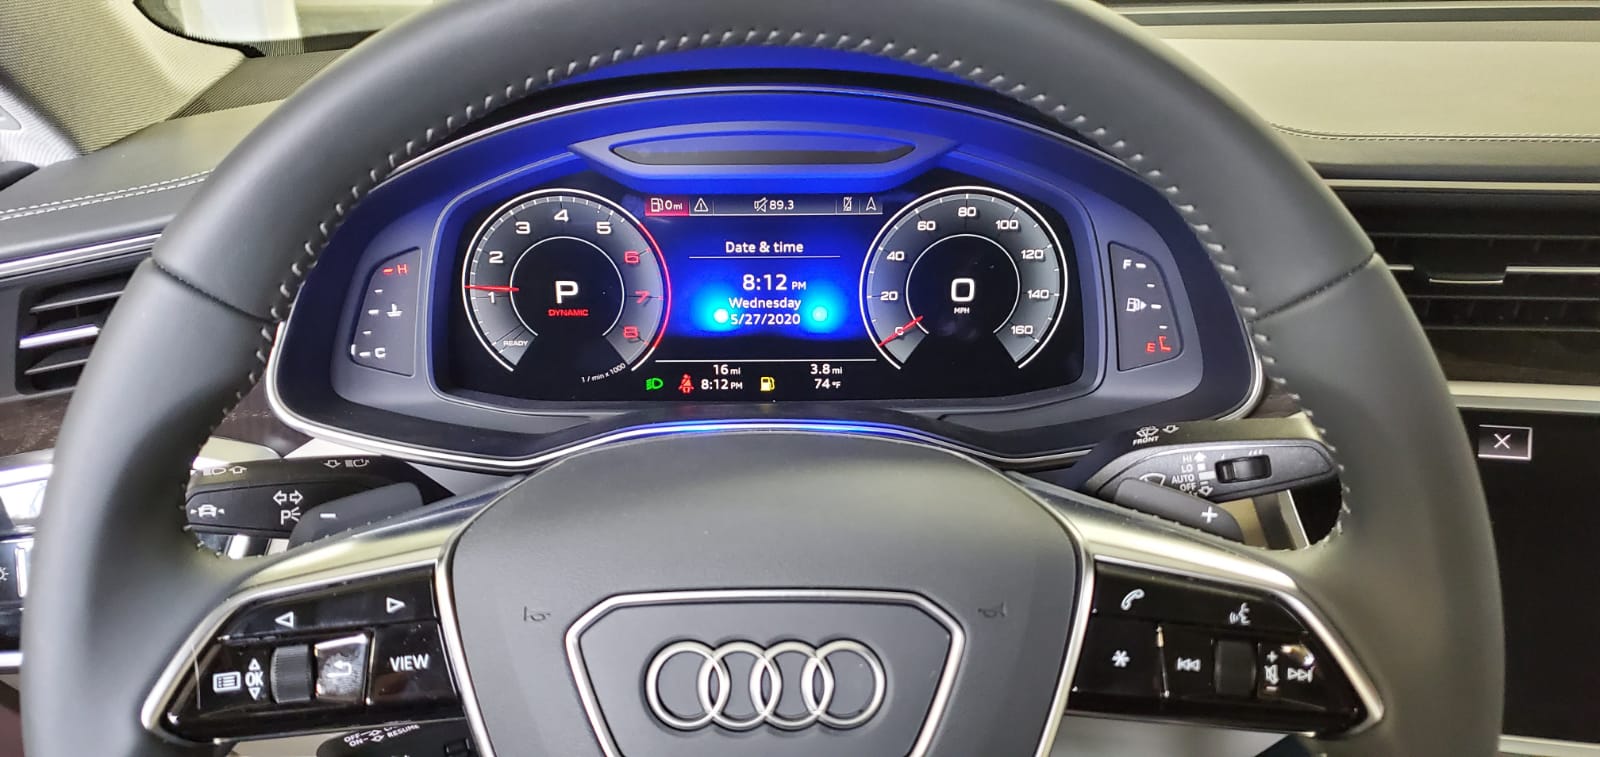 k40 radar detector hidden alert leds on a 2020 Audi A7